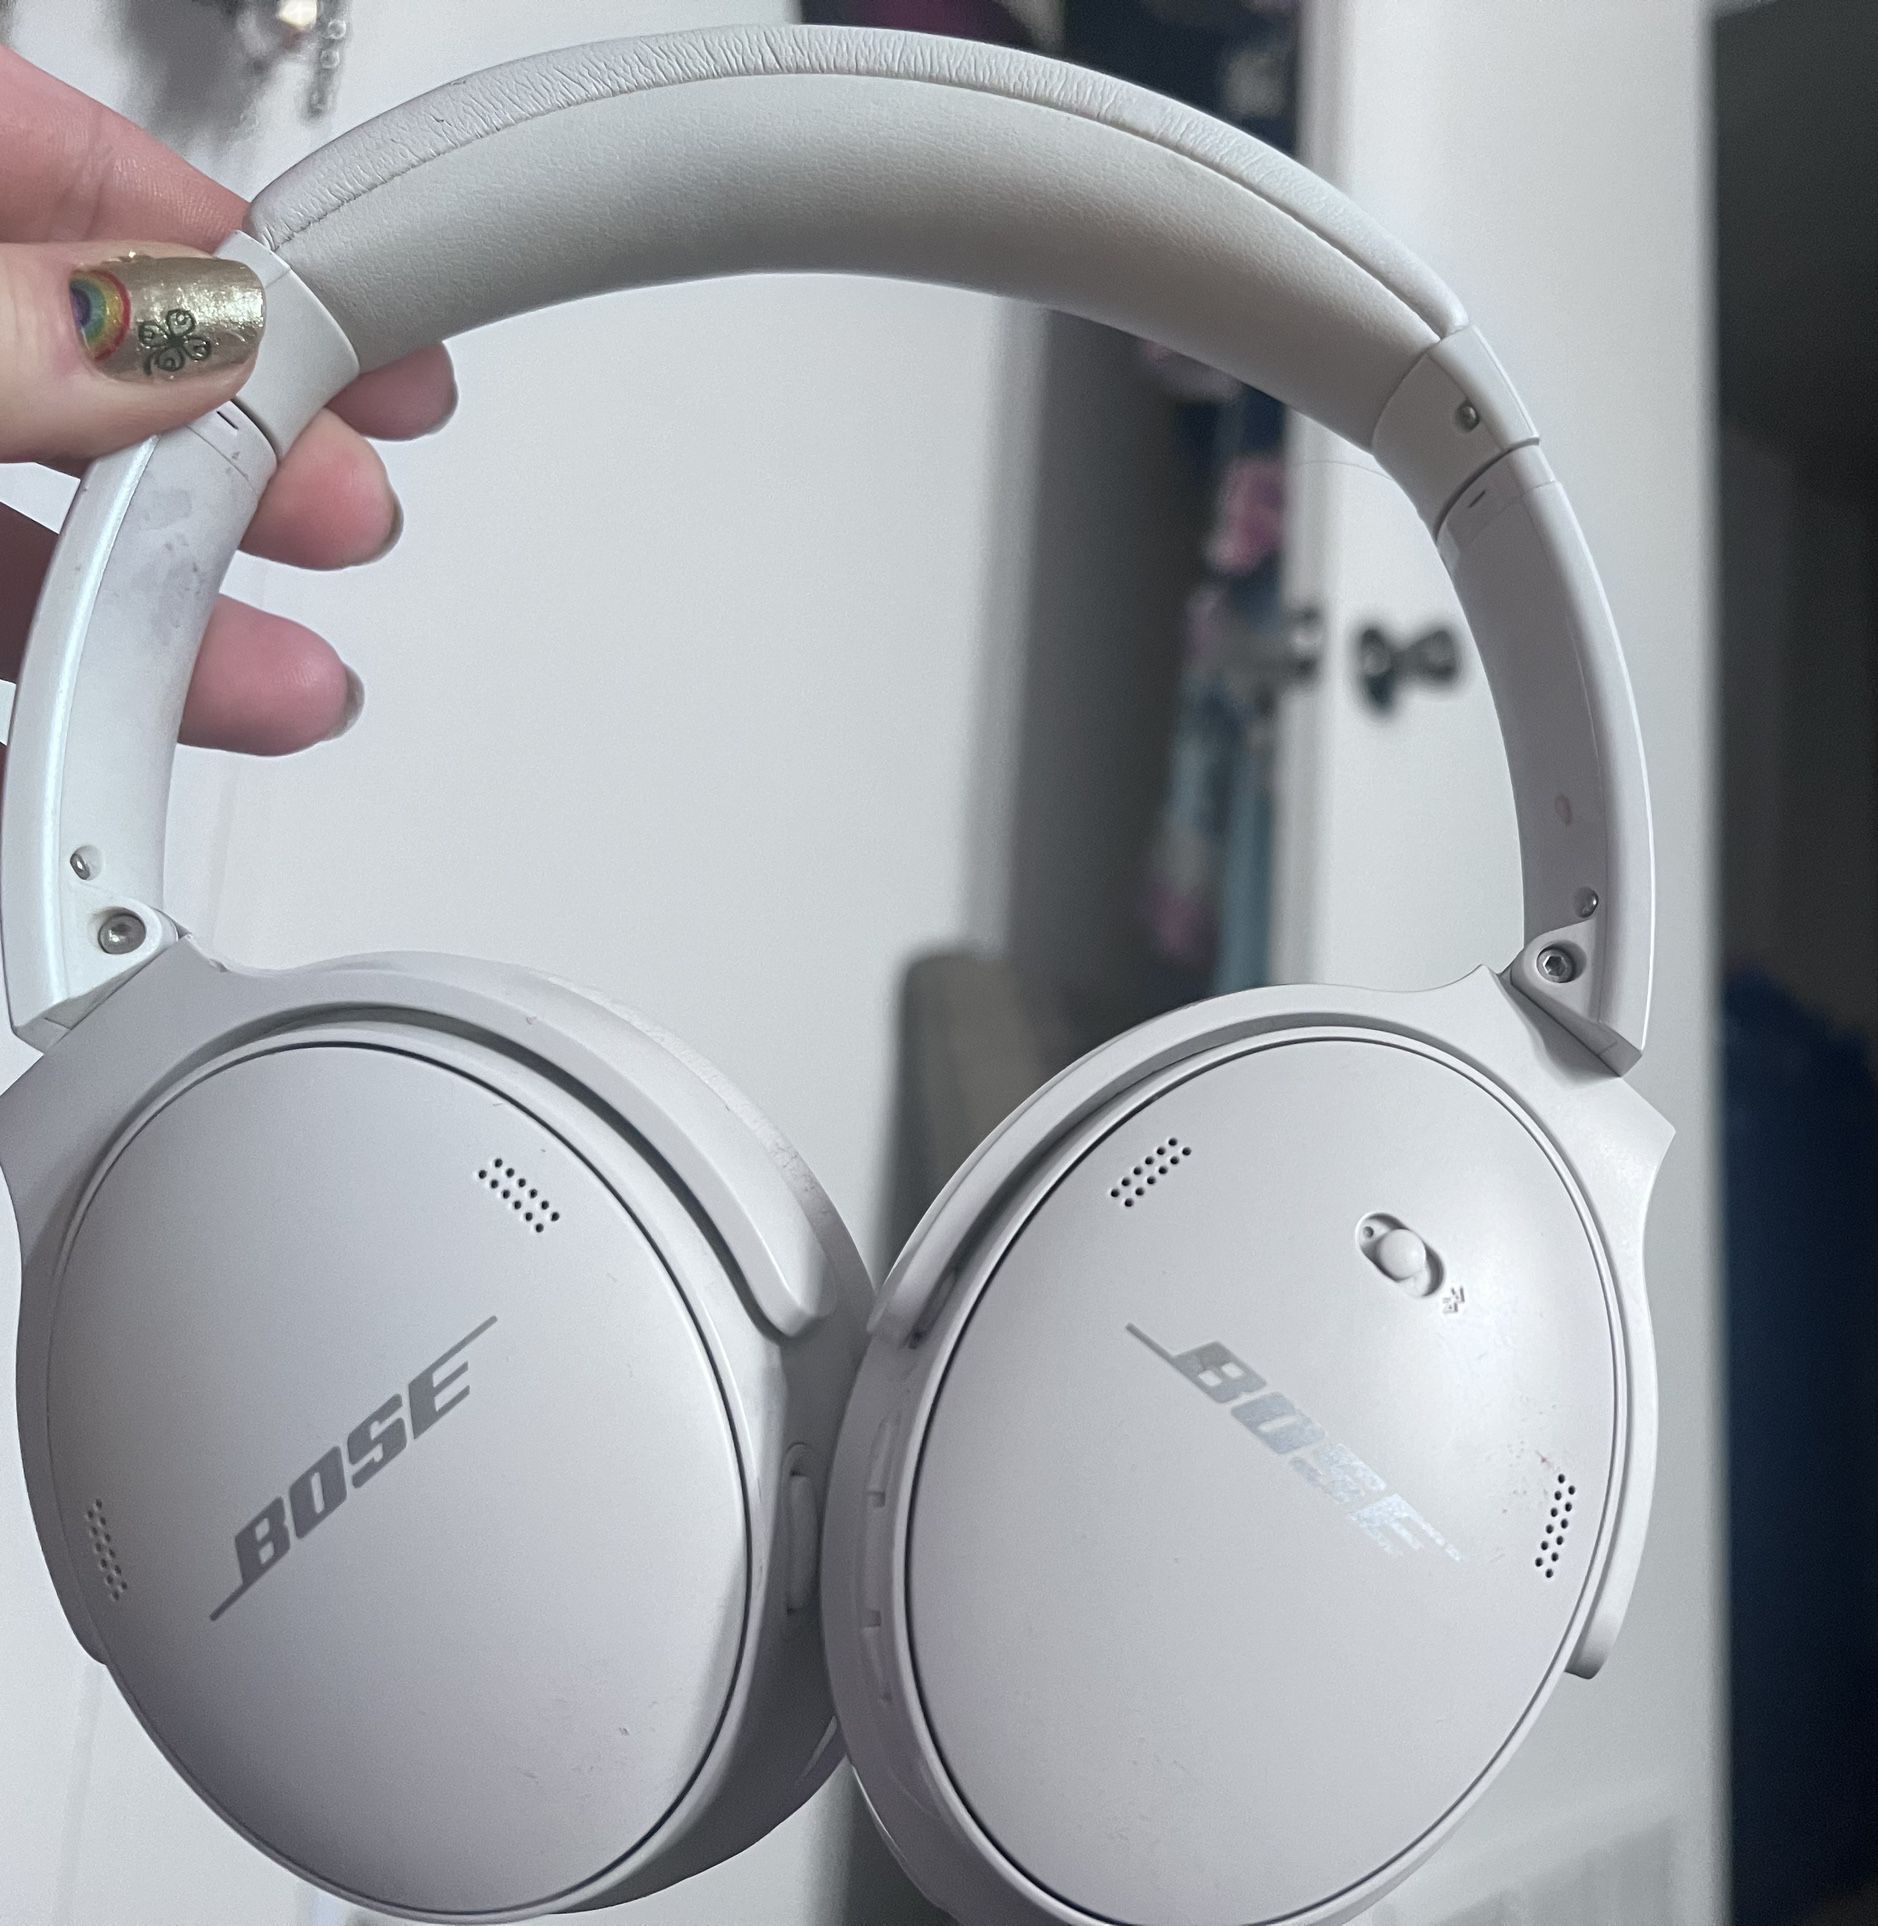 Bose Quiet Comfort Noise Cancelling Headphones